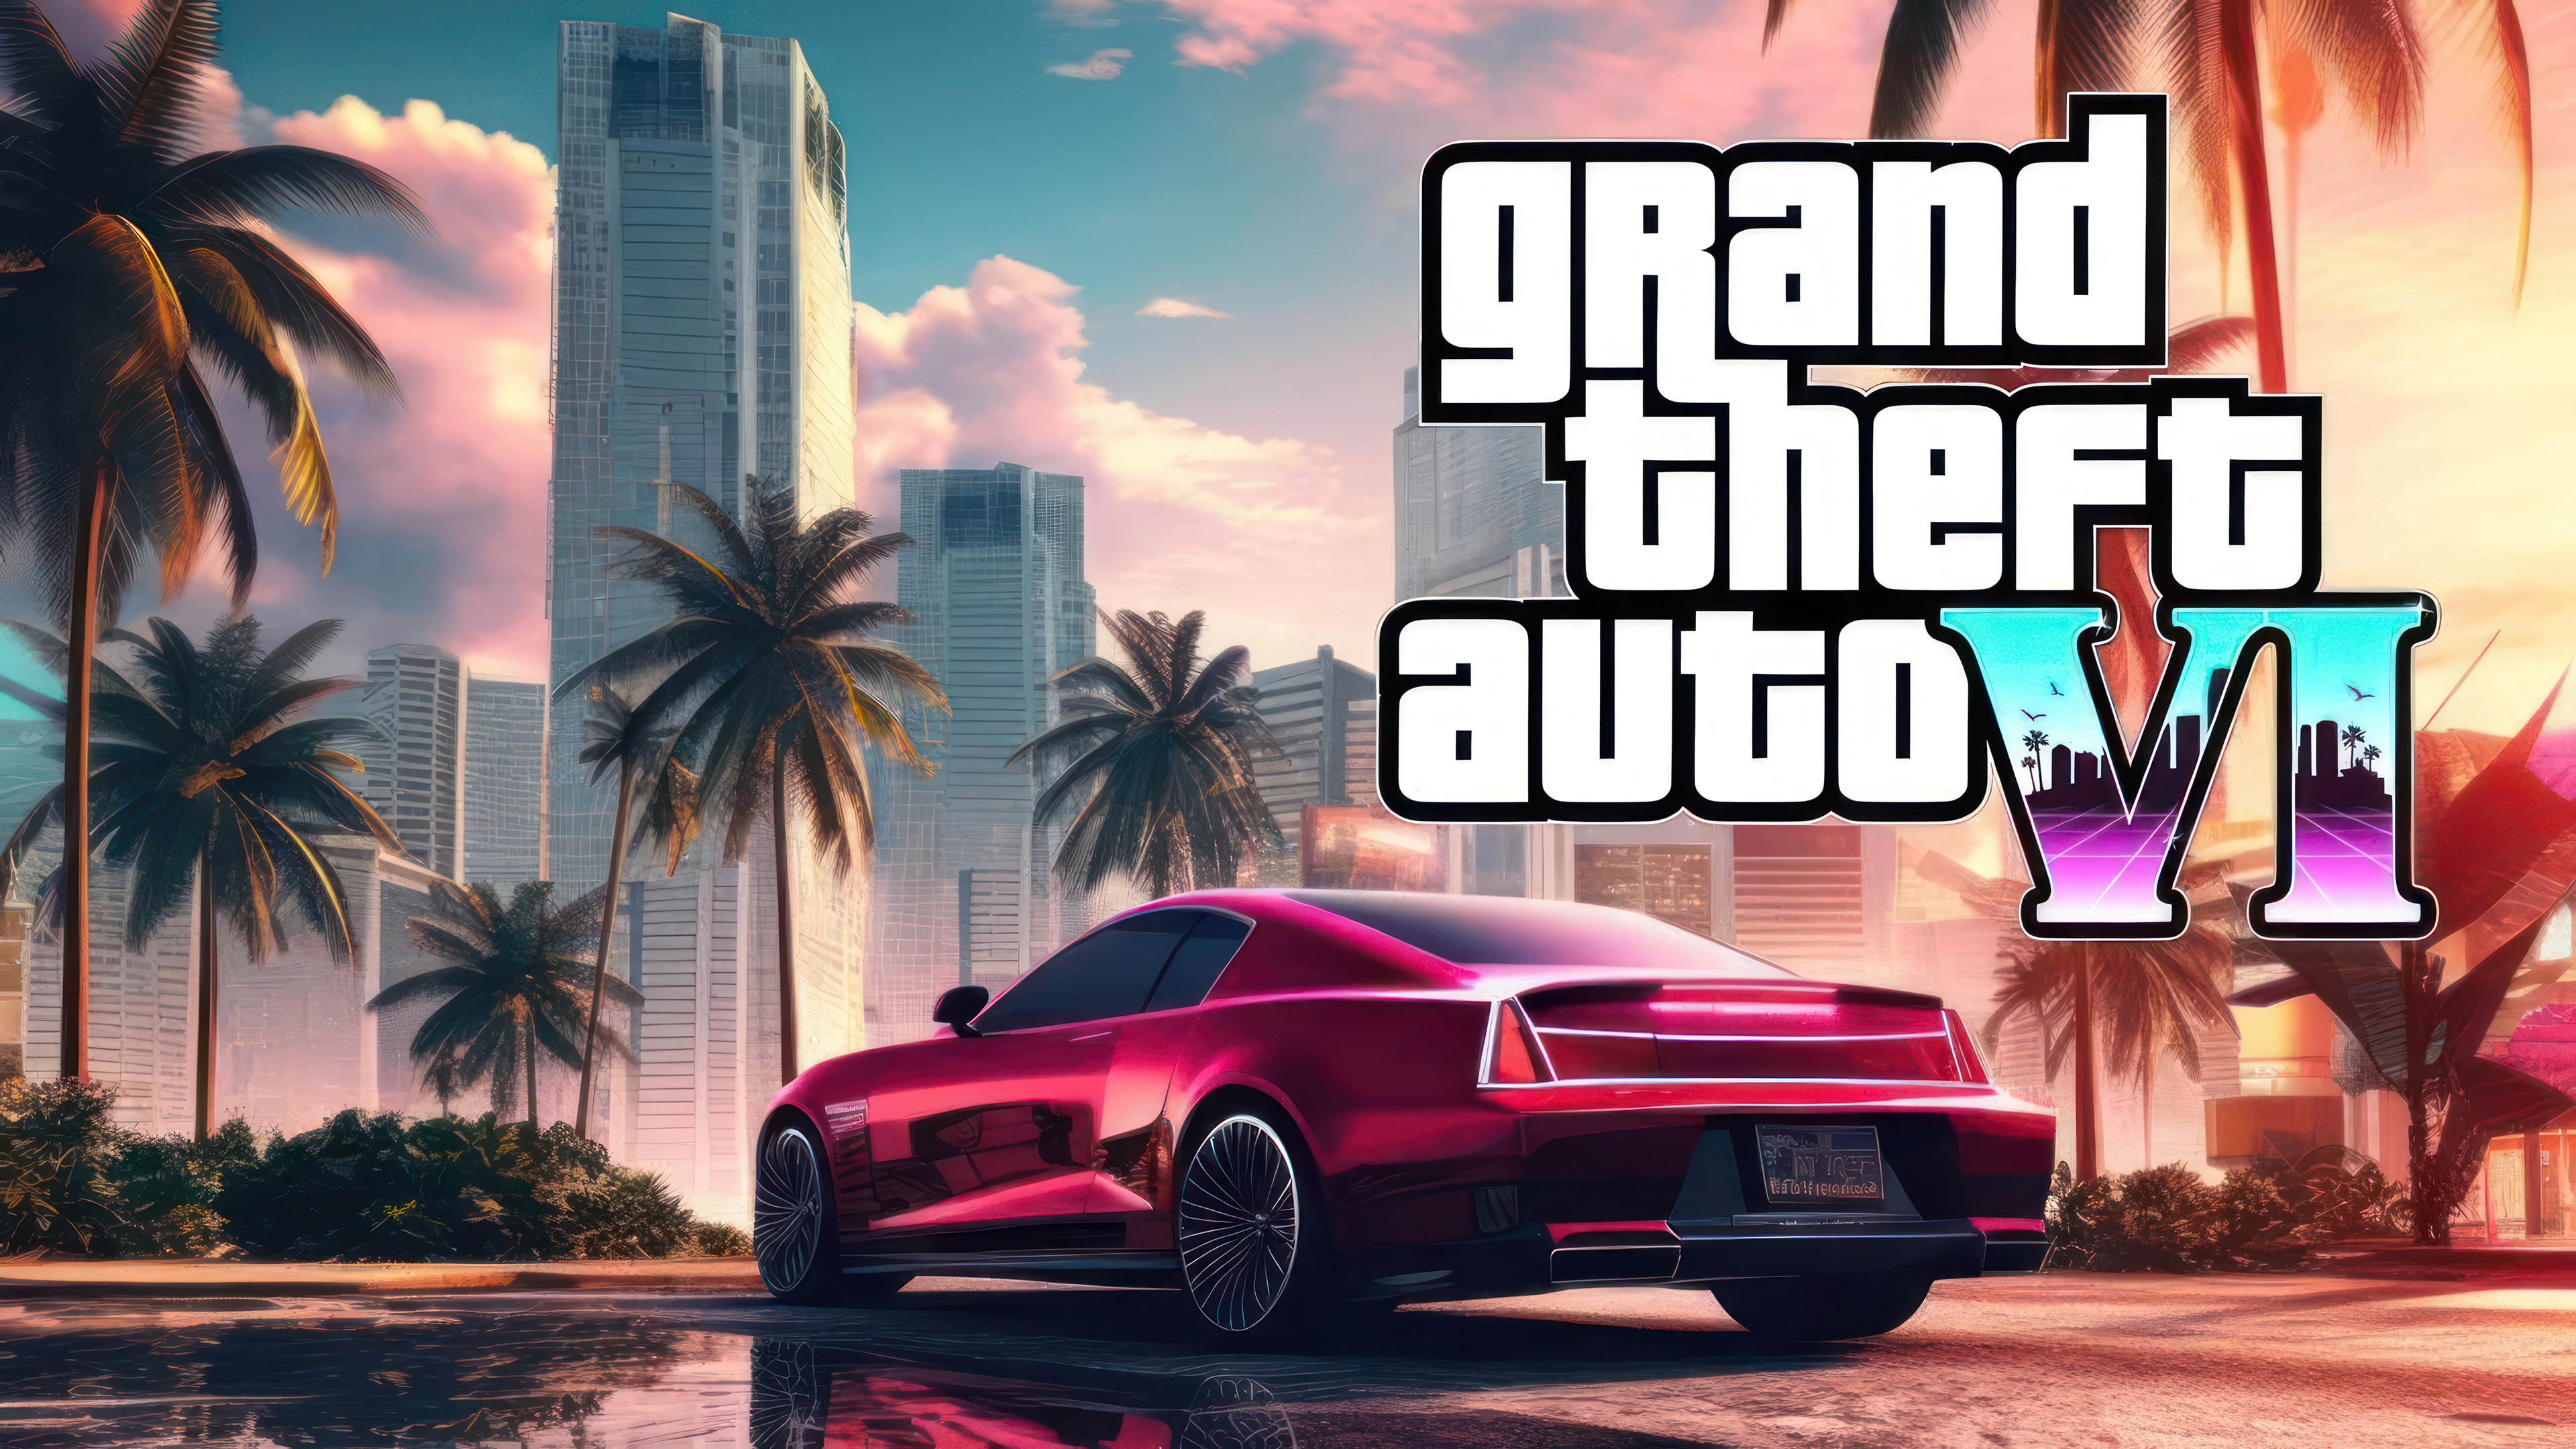 Stunning Grand Theft Auto Vi Wallpaper Free Download